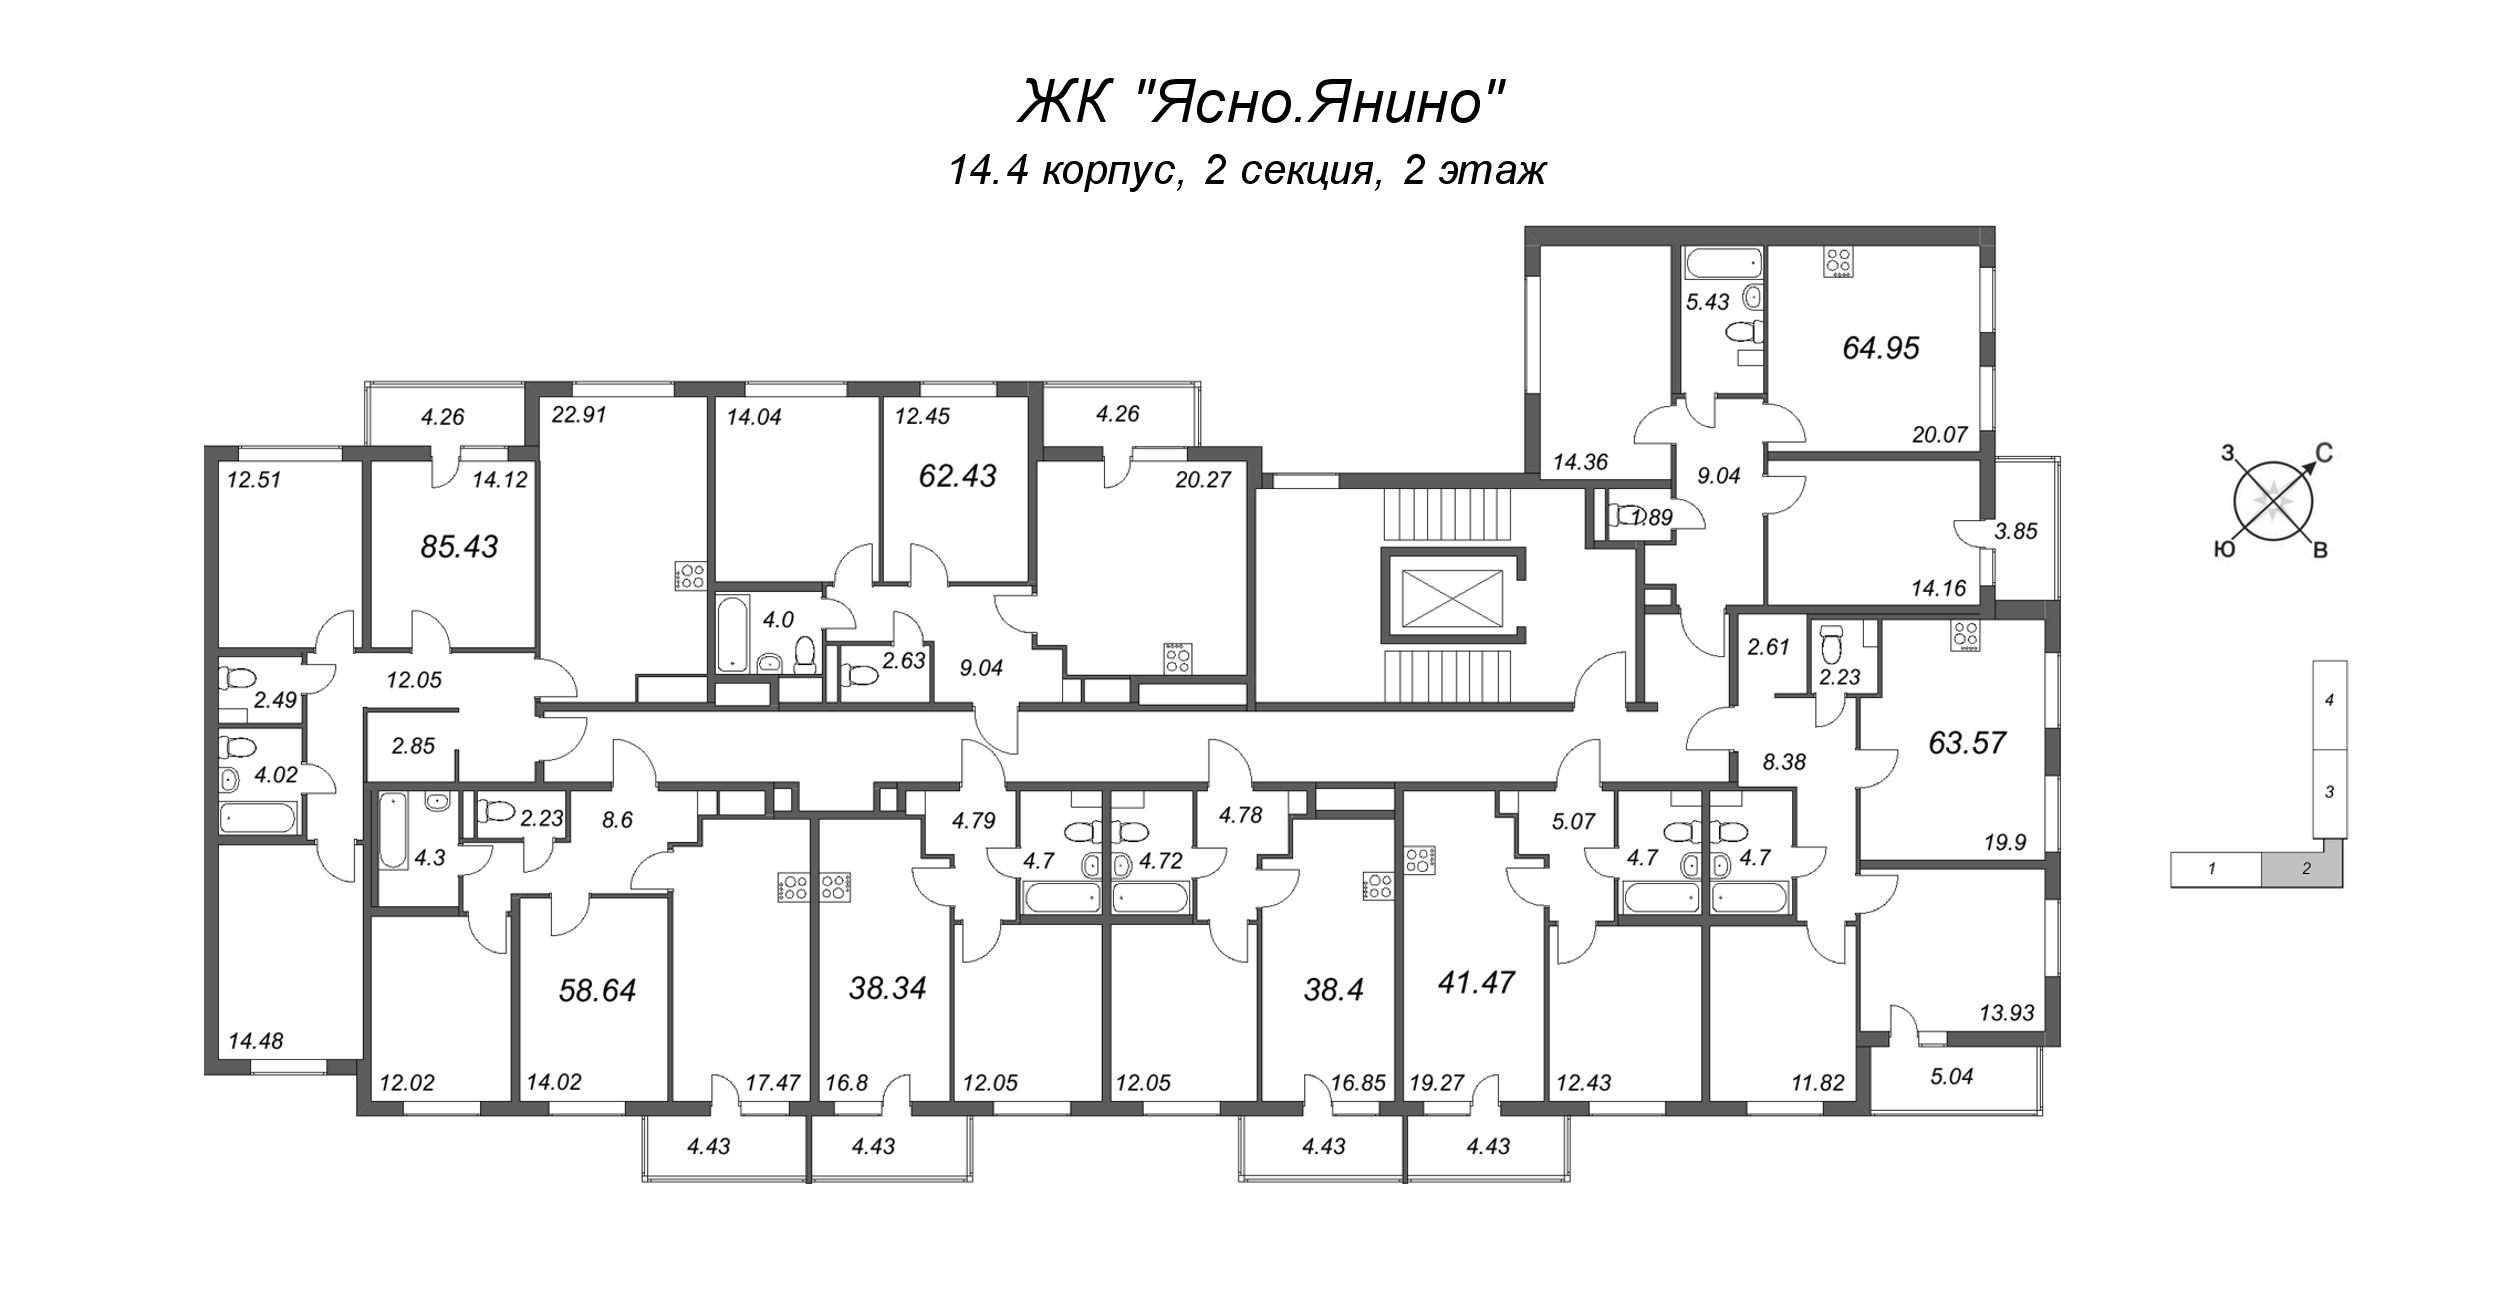 2-комнатная (Евро) квартира, 38.34 м² - планировка этажа